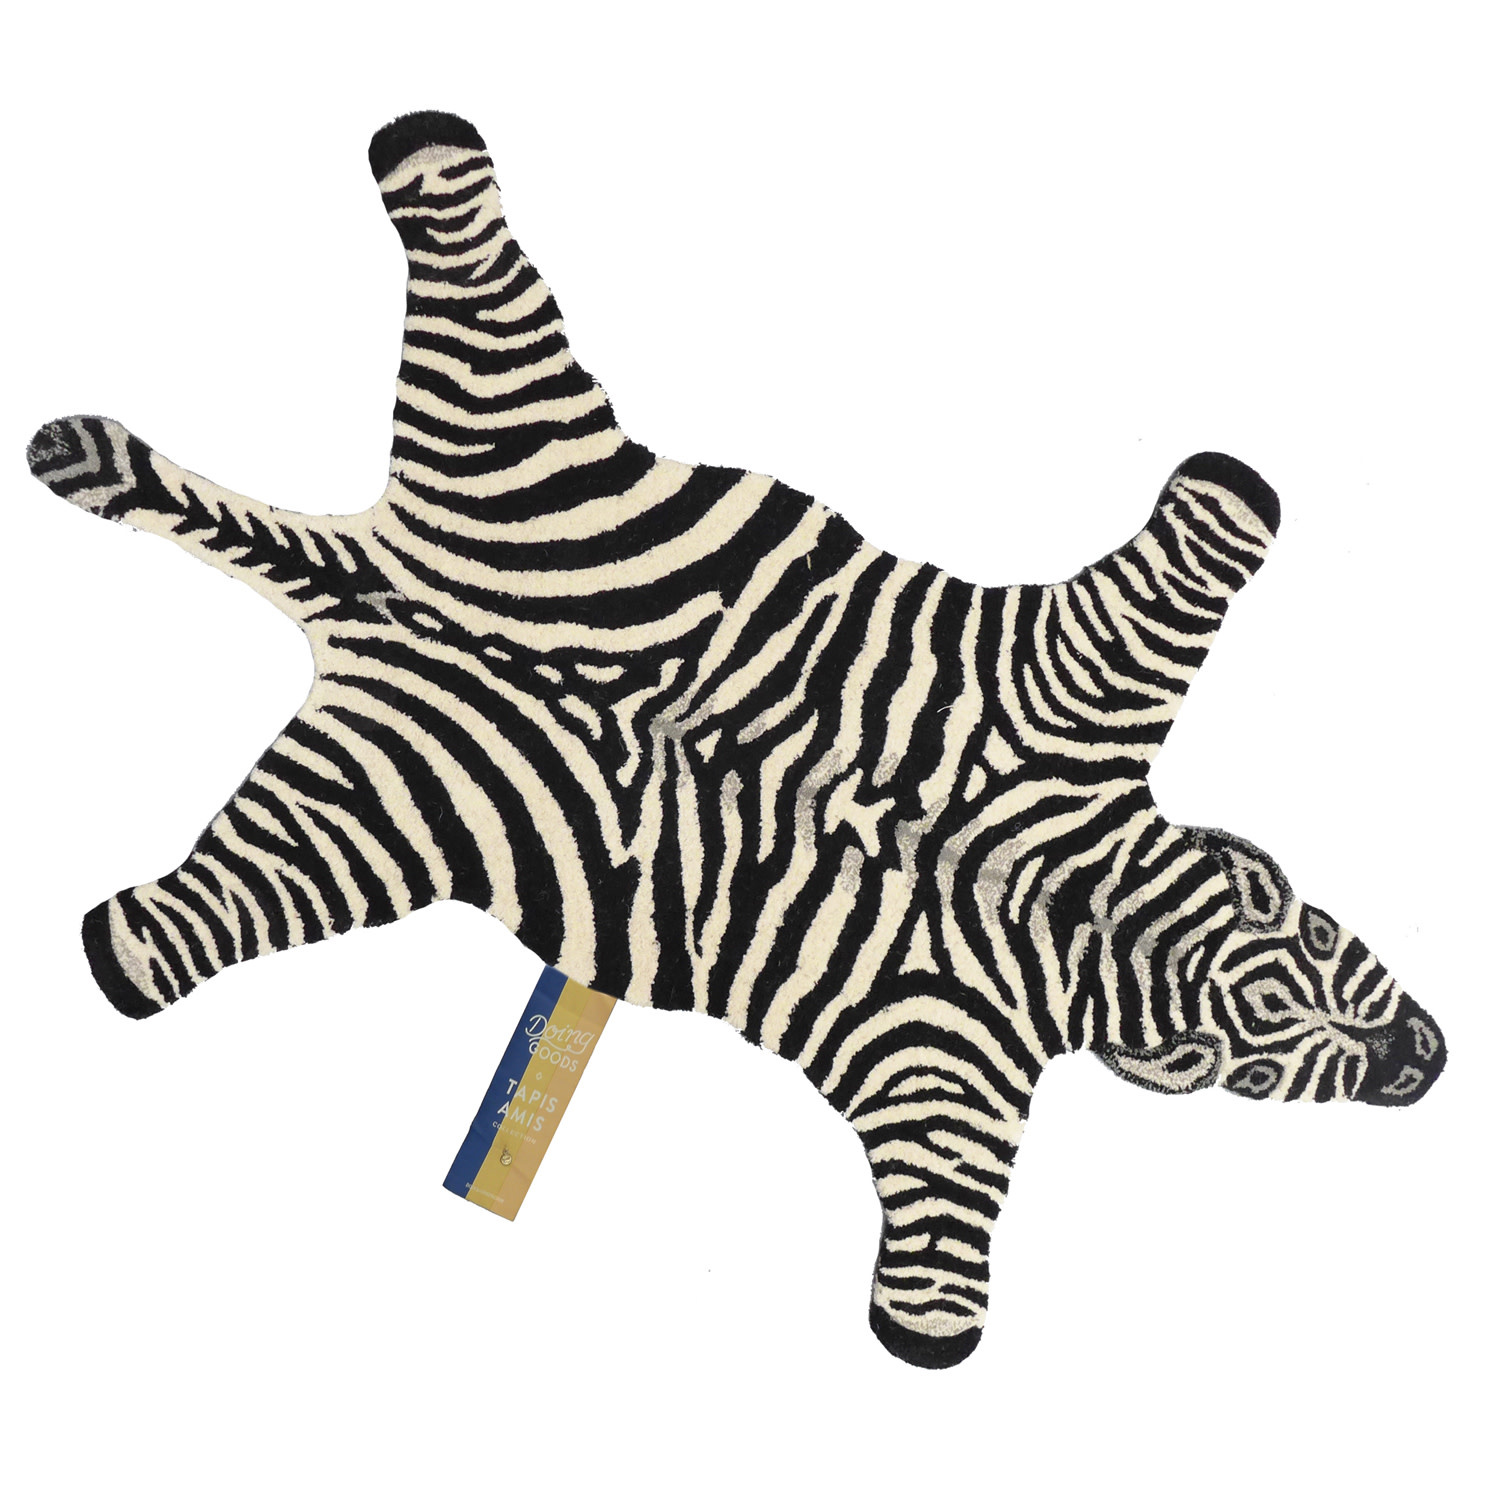 Chubby Zebra small rug, Doing Goods - Hedgehog and